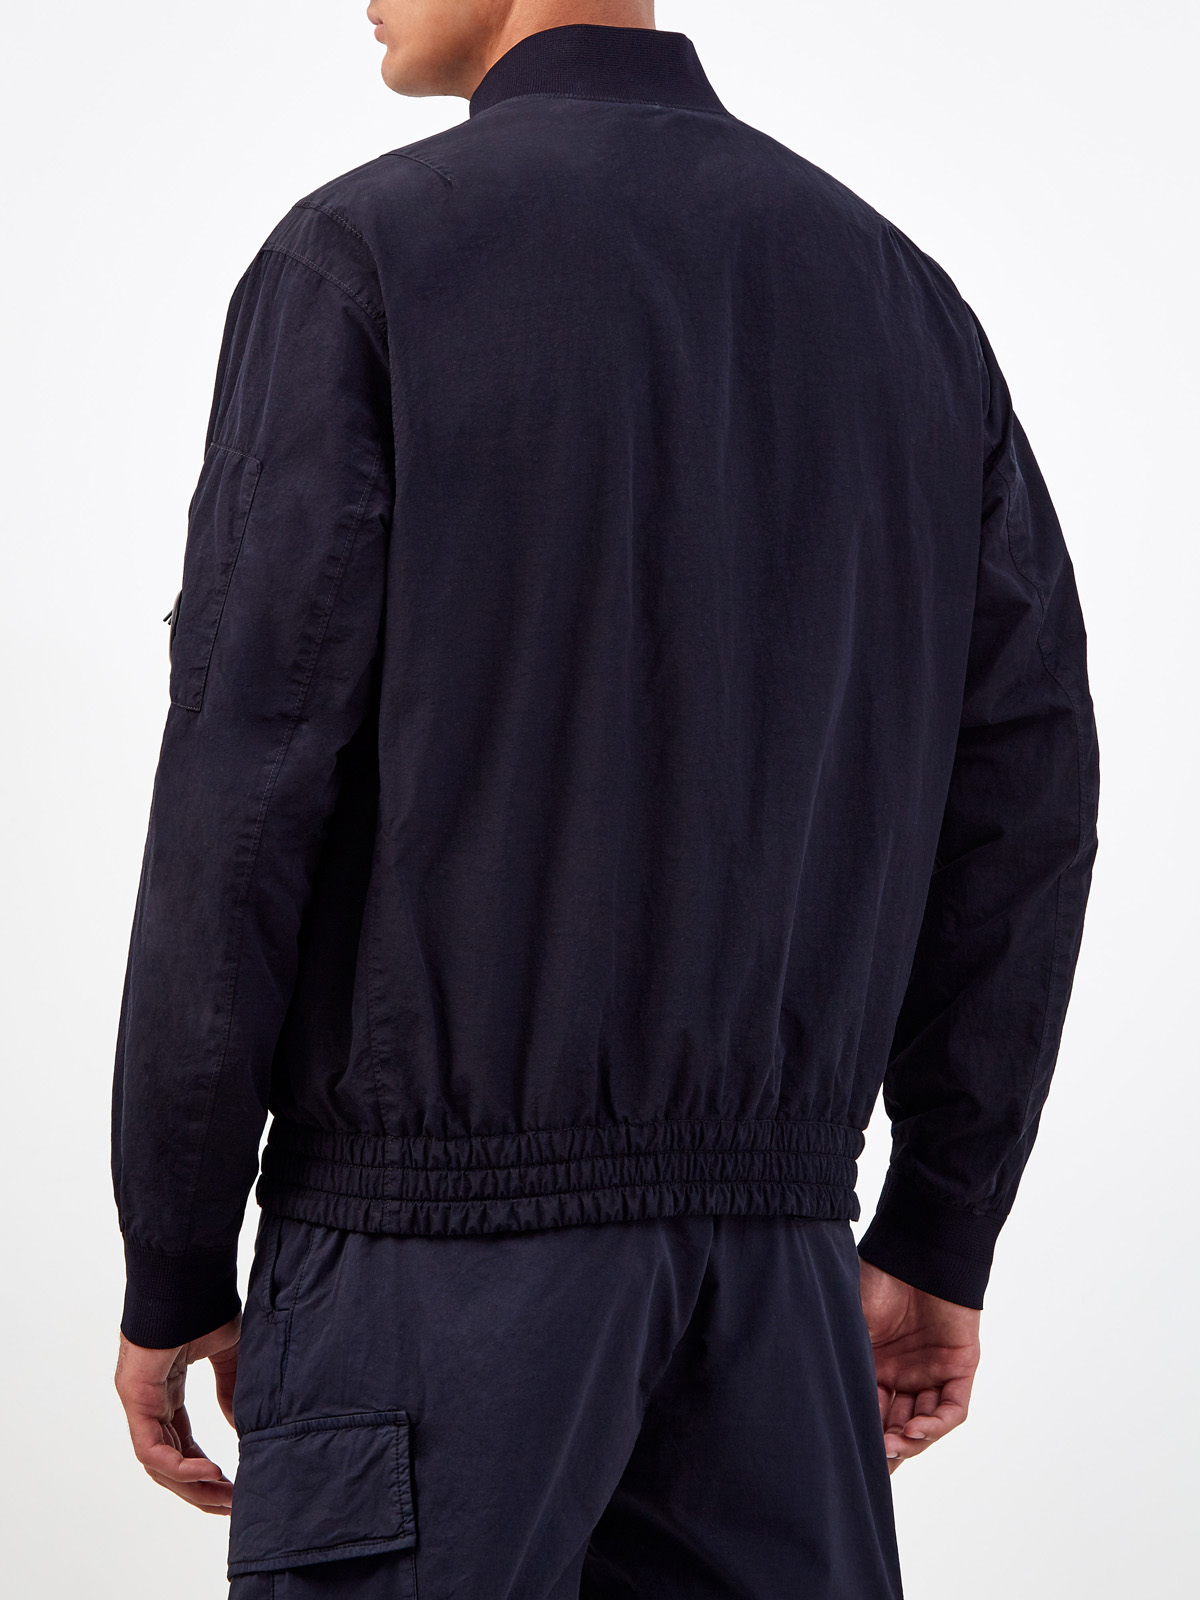 Куртка из окрашенного вручную нейлона Flatt Nylon с макро-карманами C.P.COMPANY, цвет синий, размер M;XL;L - фото 4